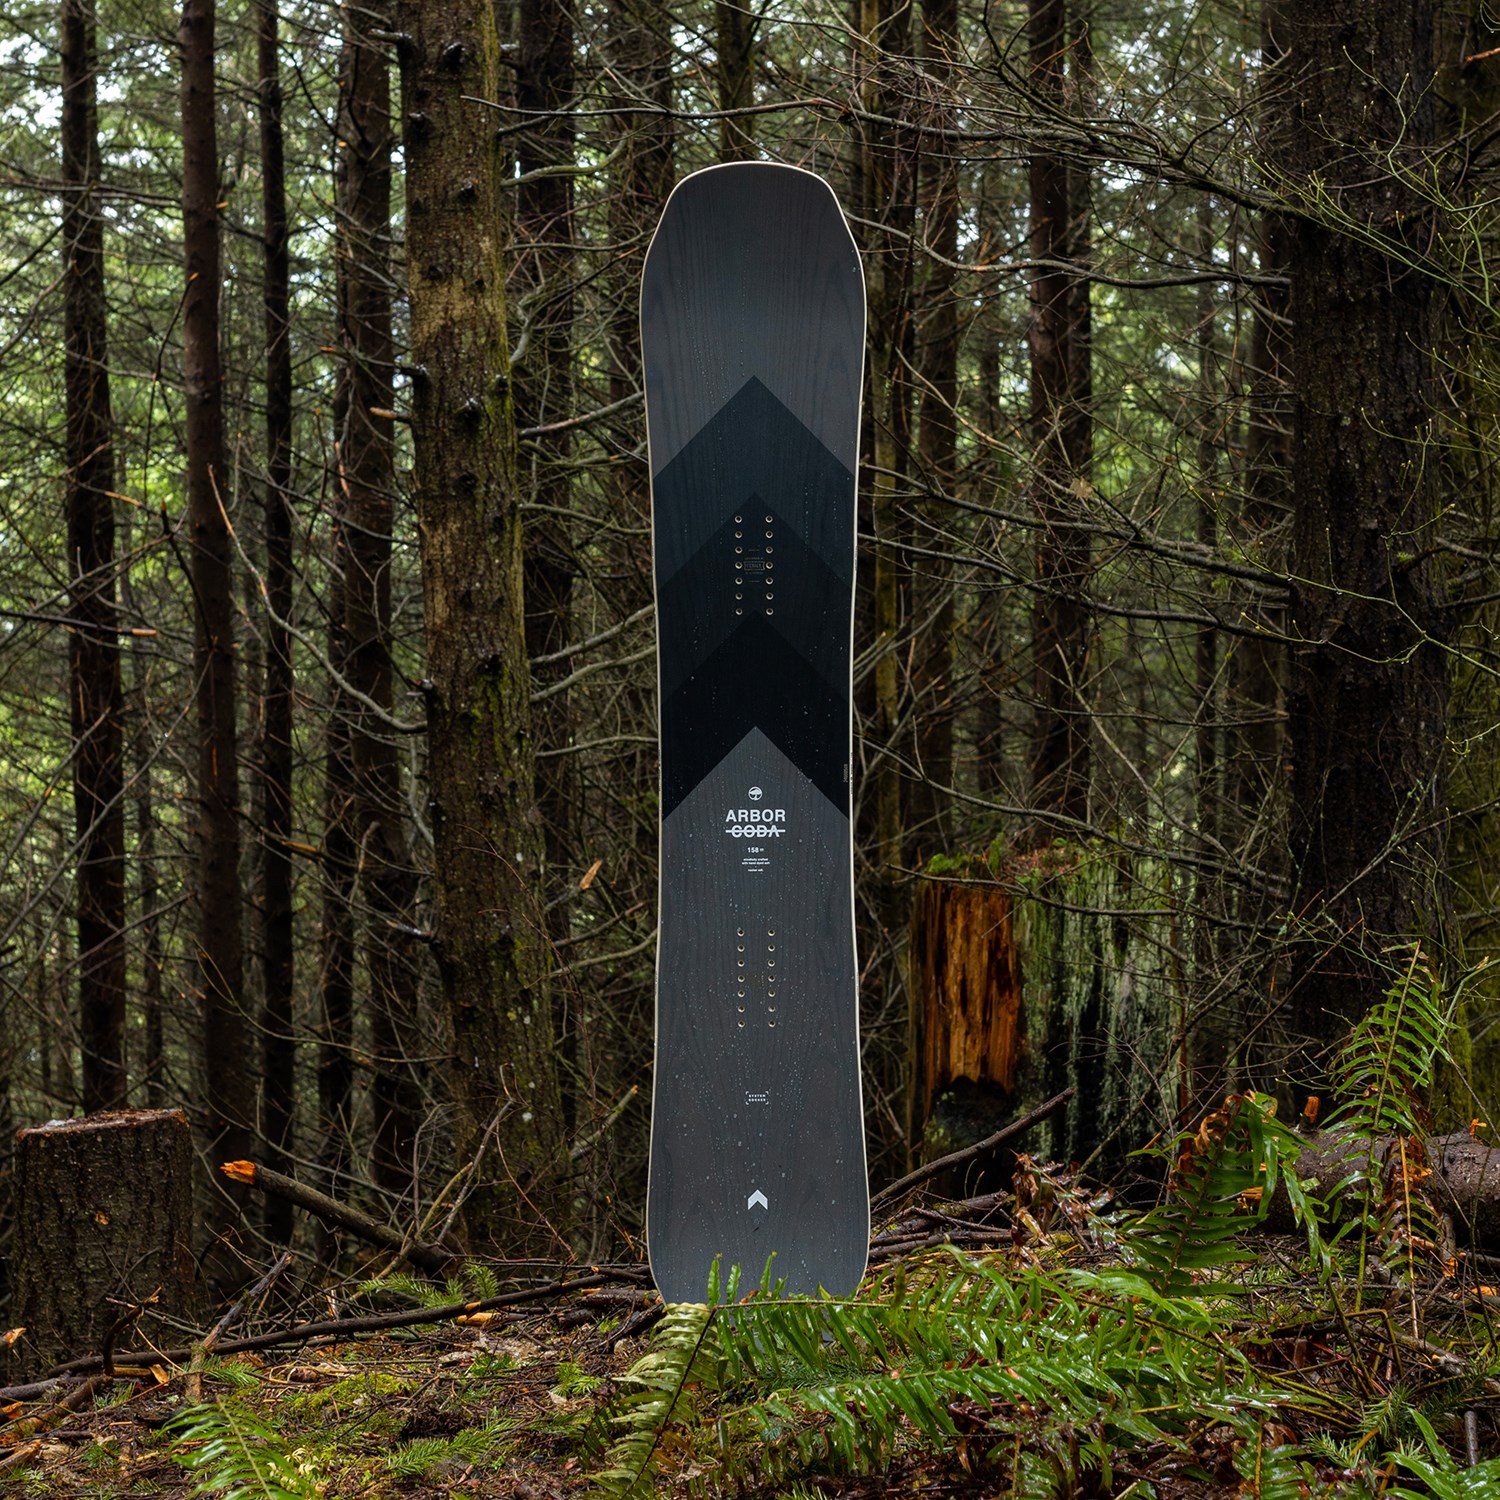 Arbor Coda Camber Snowboard 2024